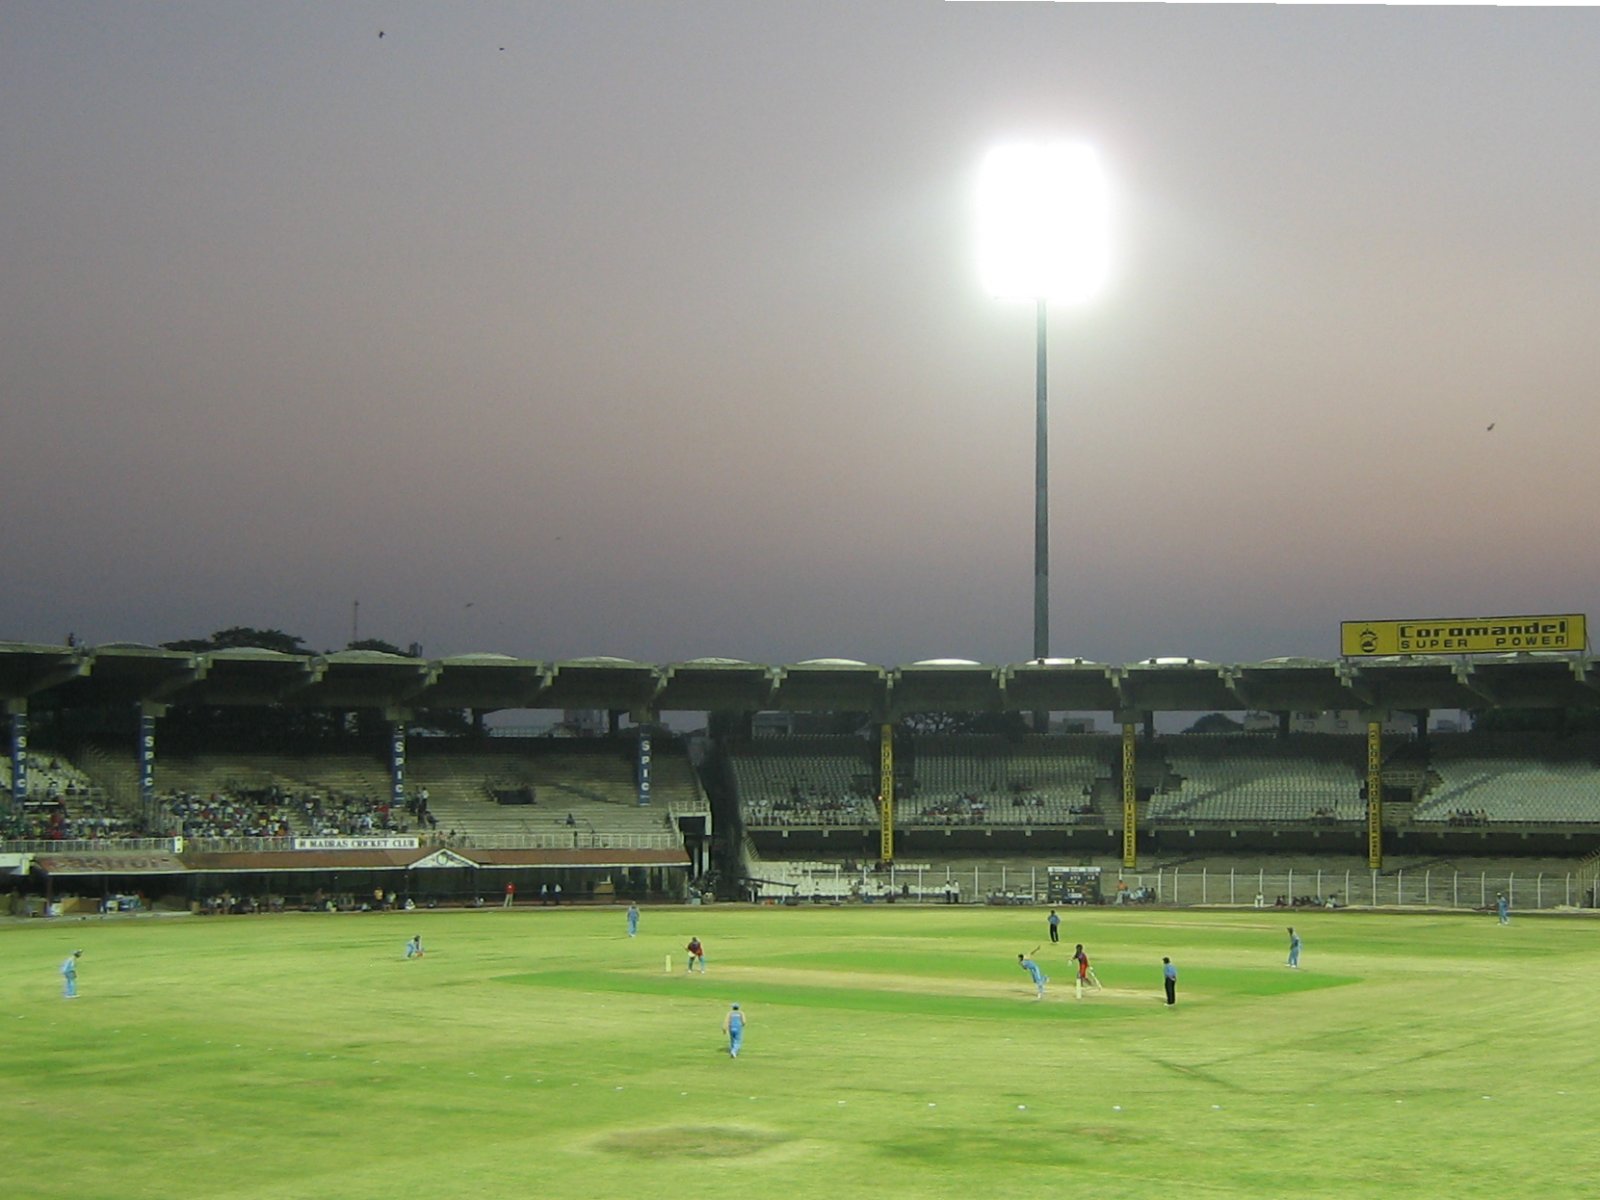 http://3.bp.blogspot.com/-dwbzZ8V07wQ/TYCeAI4McHI/AAAAAAAACg0/uIXpdmLWBHA/s1600/Chidambaram_Stadium_Chennai_wallpaper.jpg